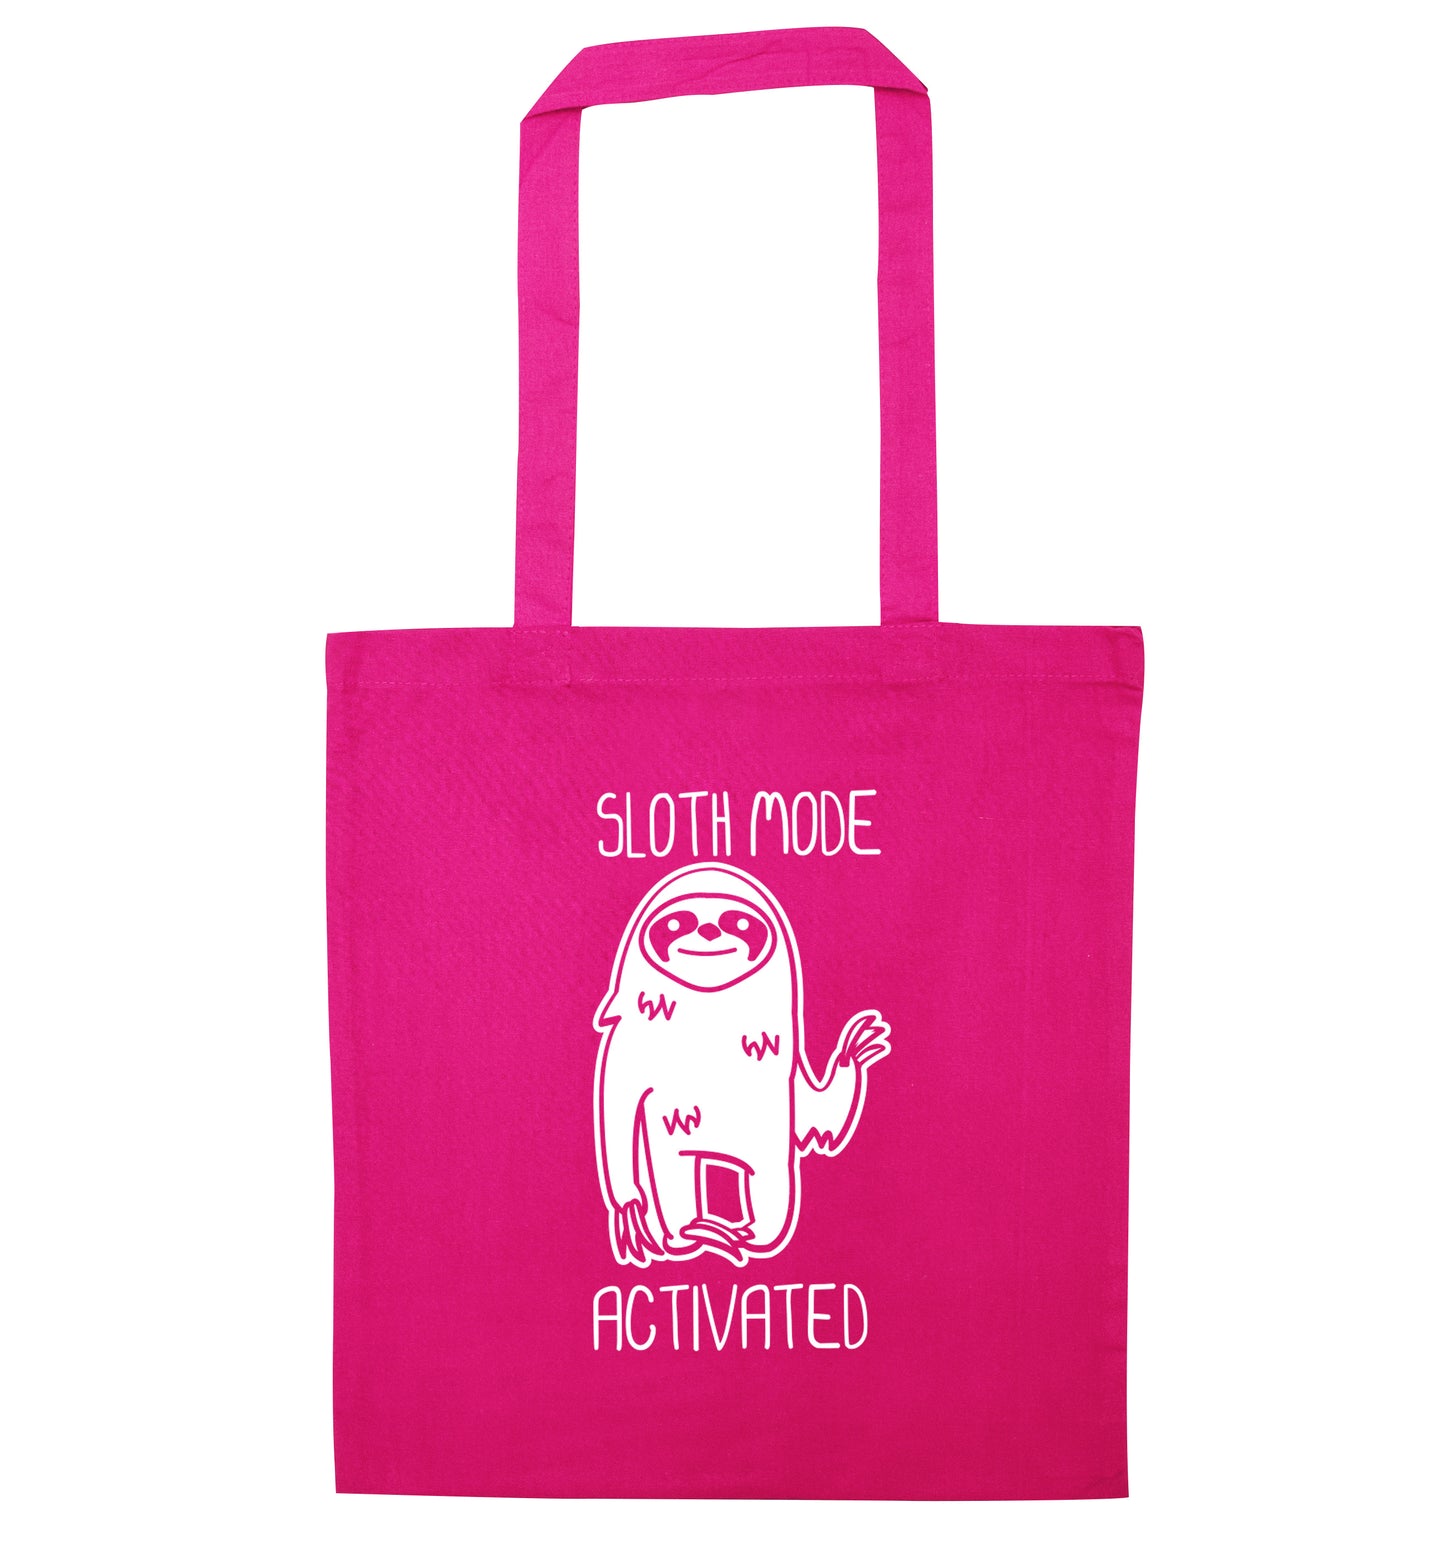 Sloth mode acitvated pink tote bag